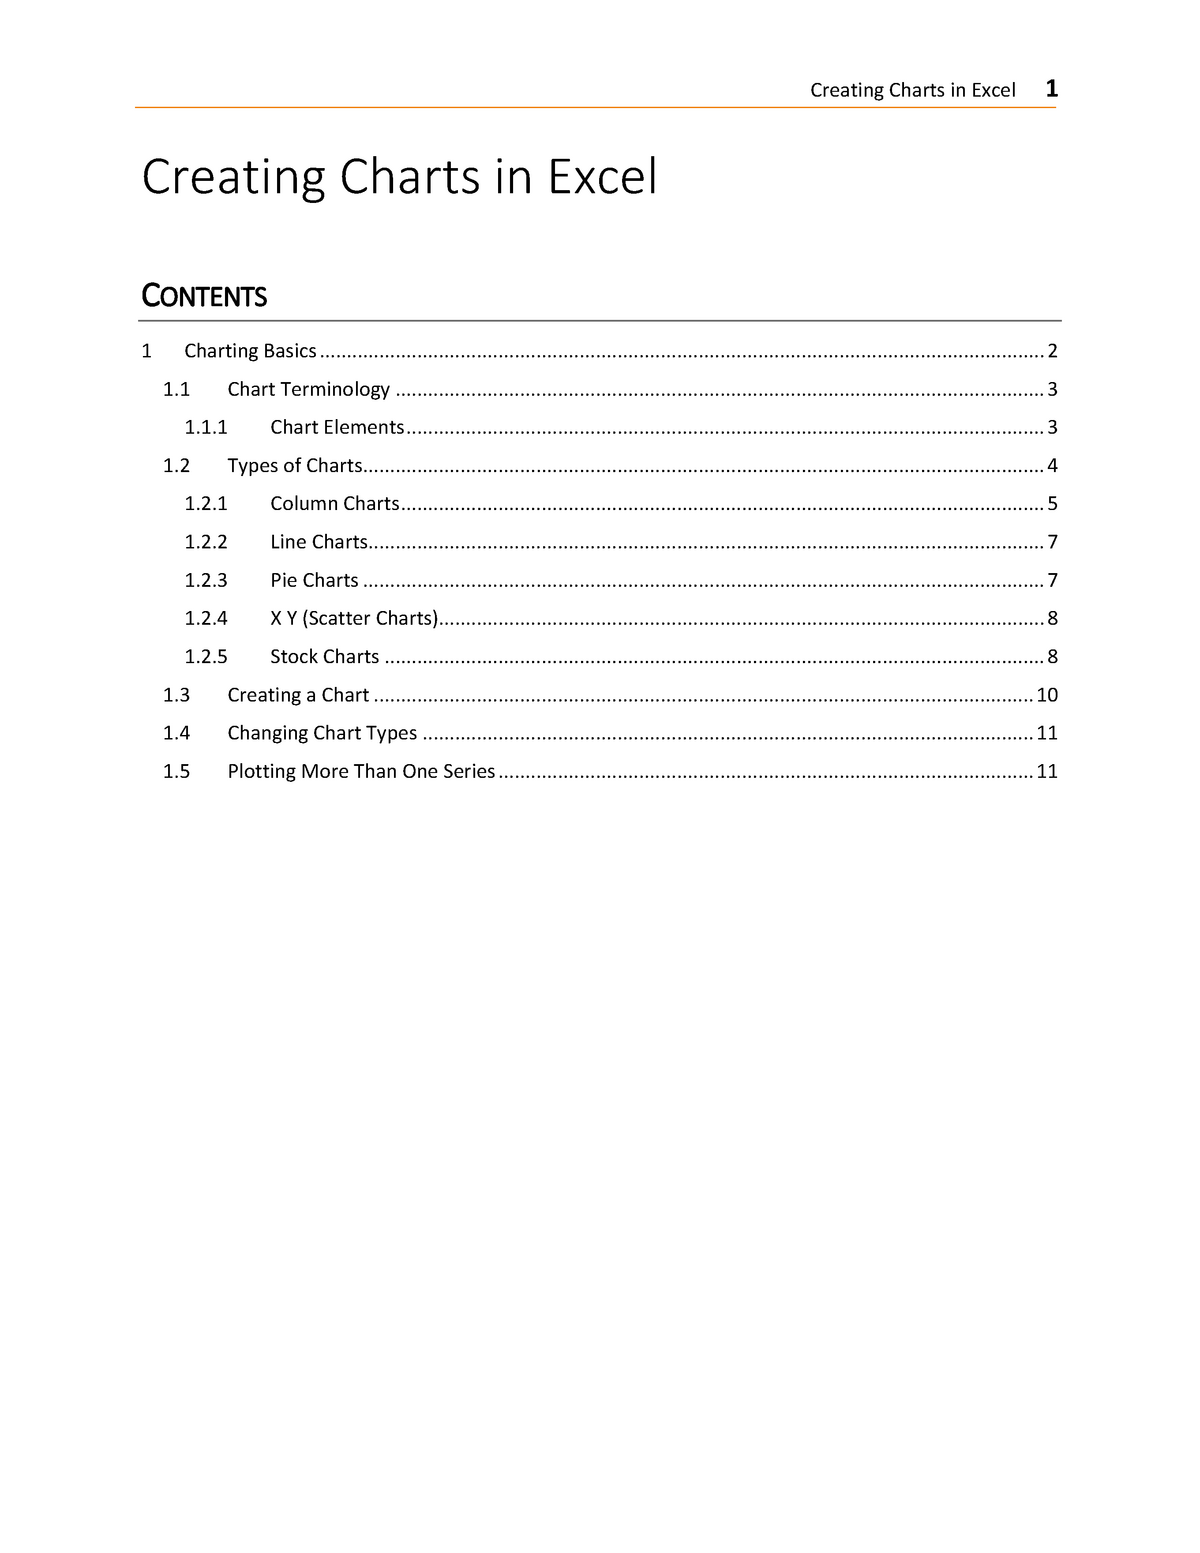 creating-charts-in-excel-2015-0204-creating-charts-in-excel-1-charting-basics-contents-1-chart